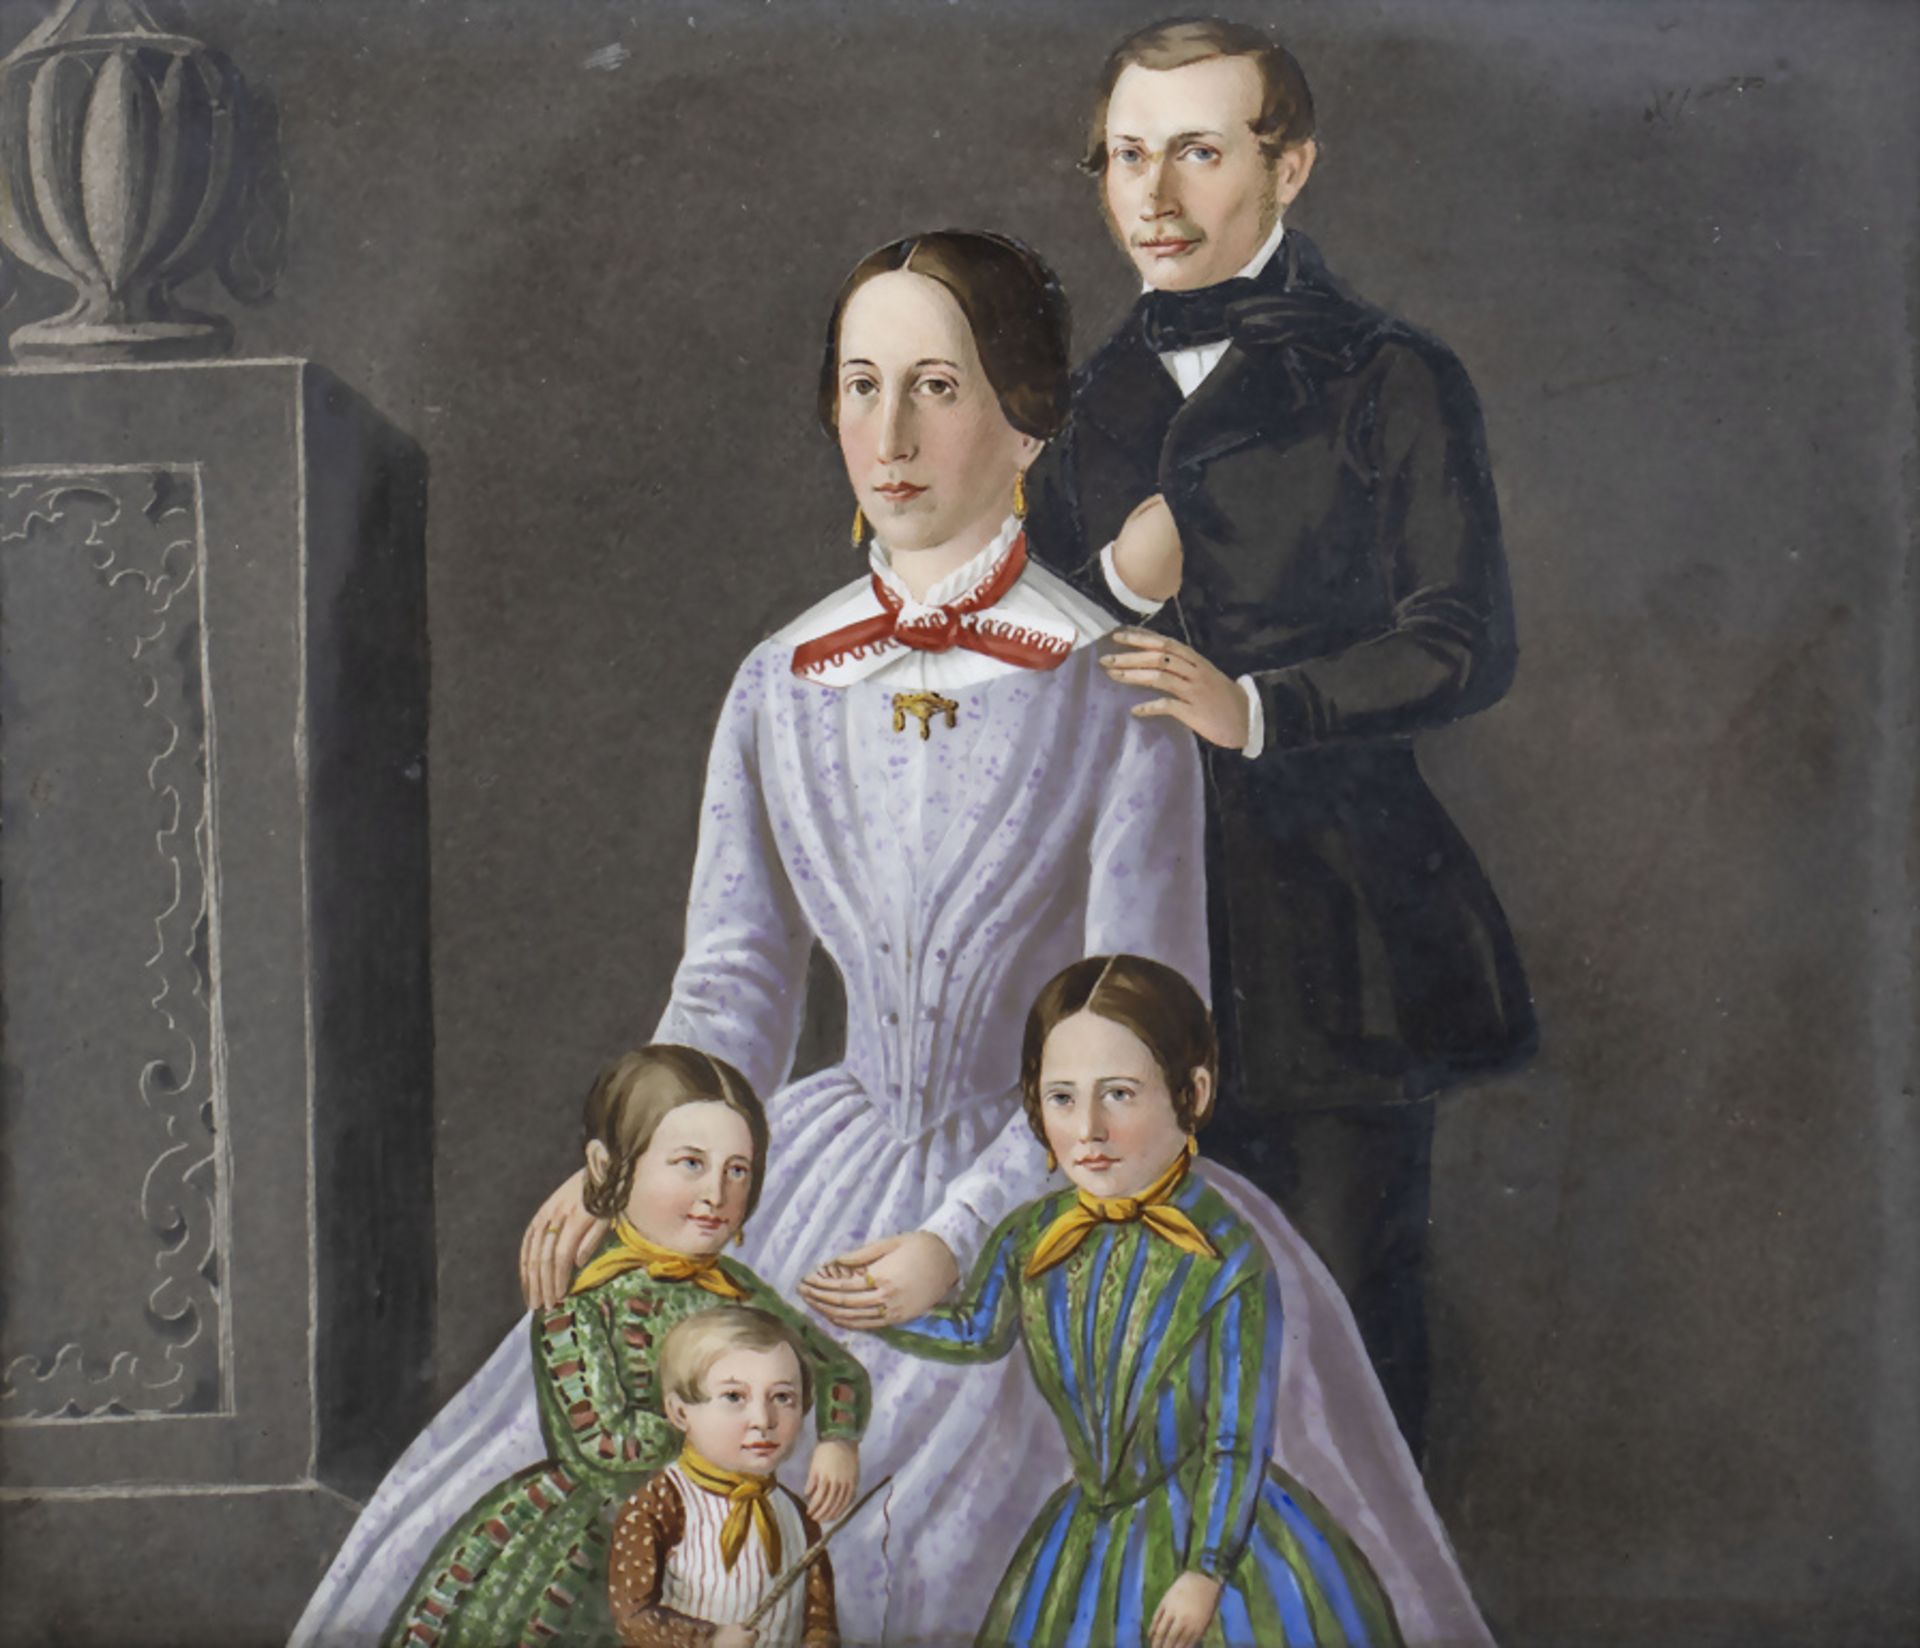 Porzellanbild einer Familie / A porcelain painting of a family, KPM Berlin, 1844-1847